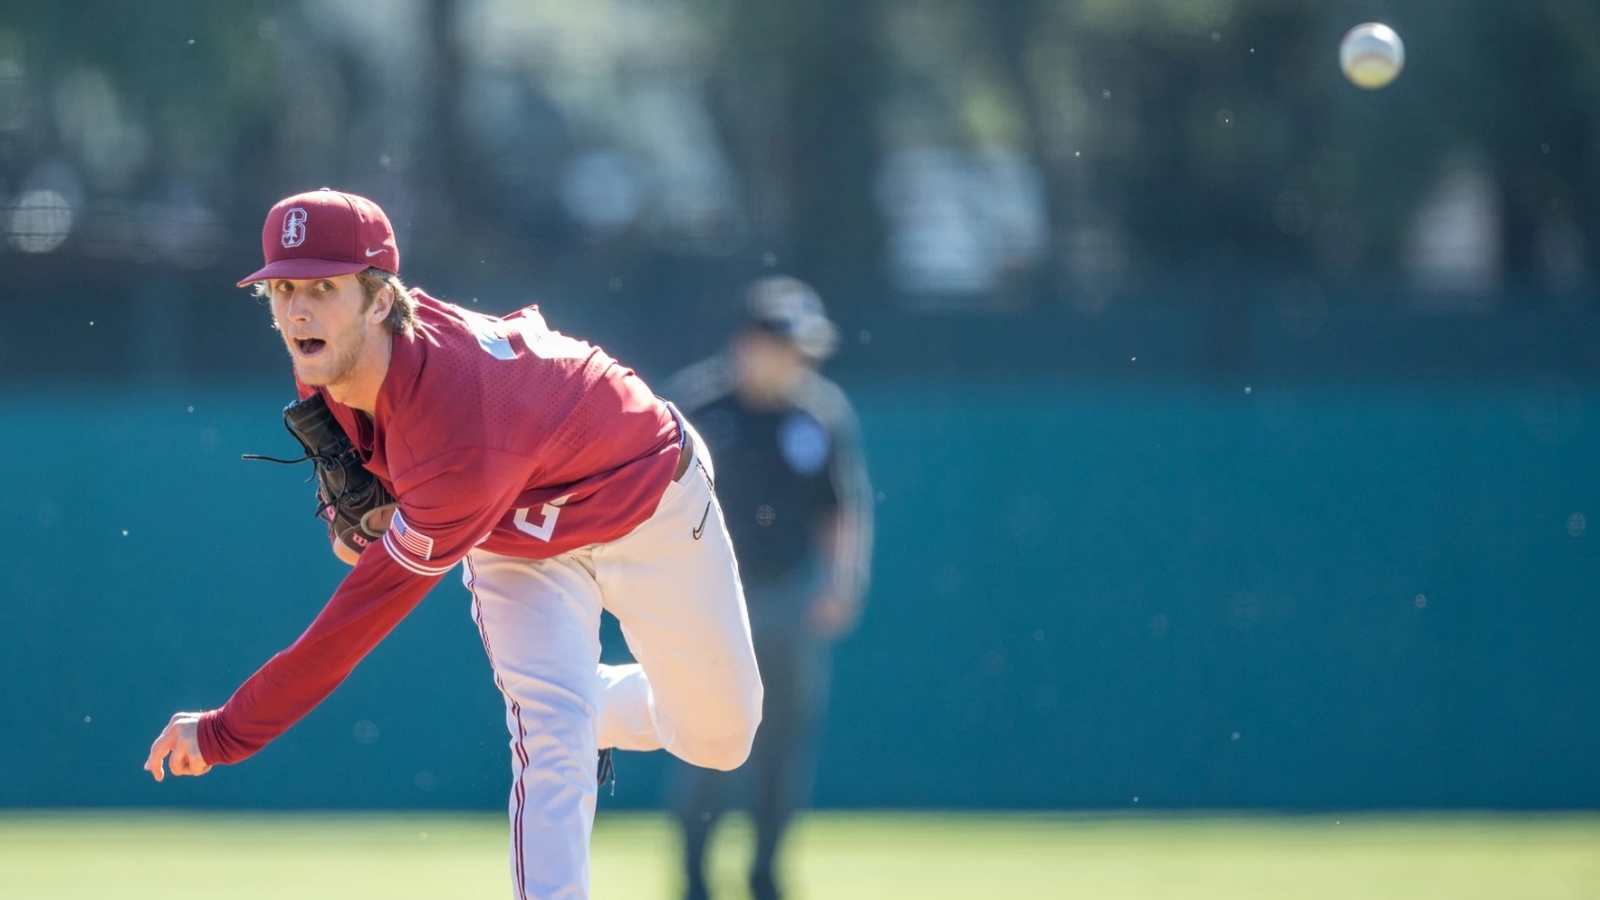 Quinn Mathews, wearing a Stanford Cardinal uniform, pitches the baseball during a game